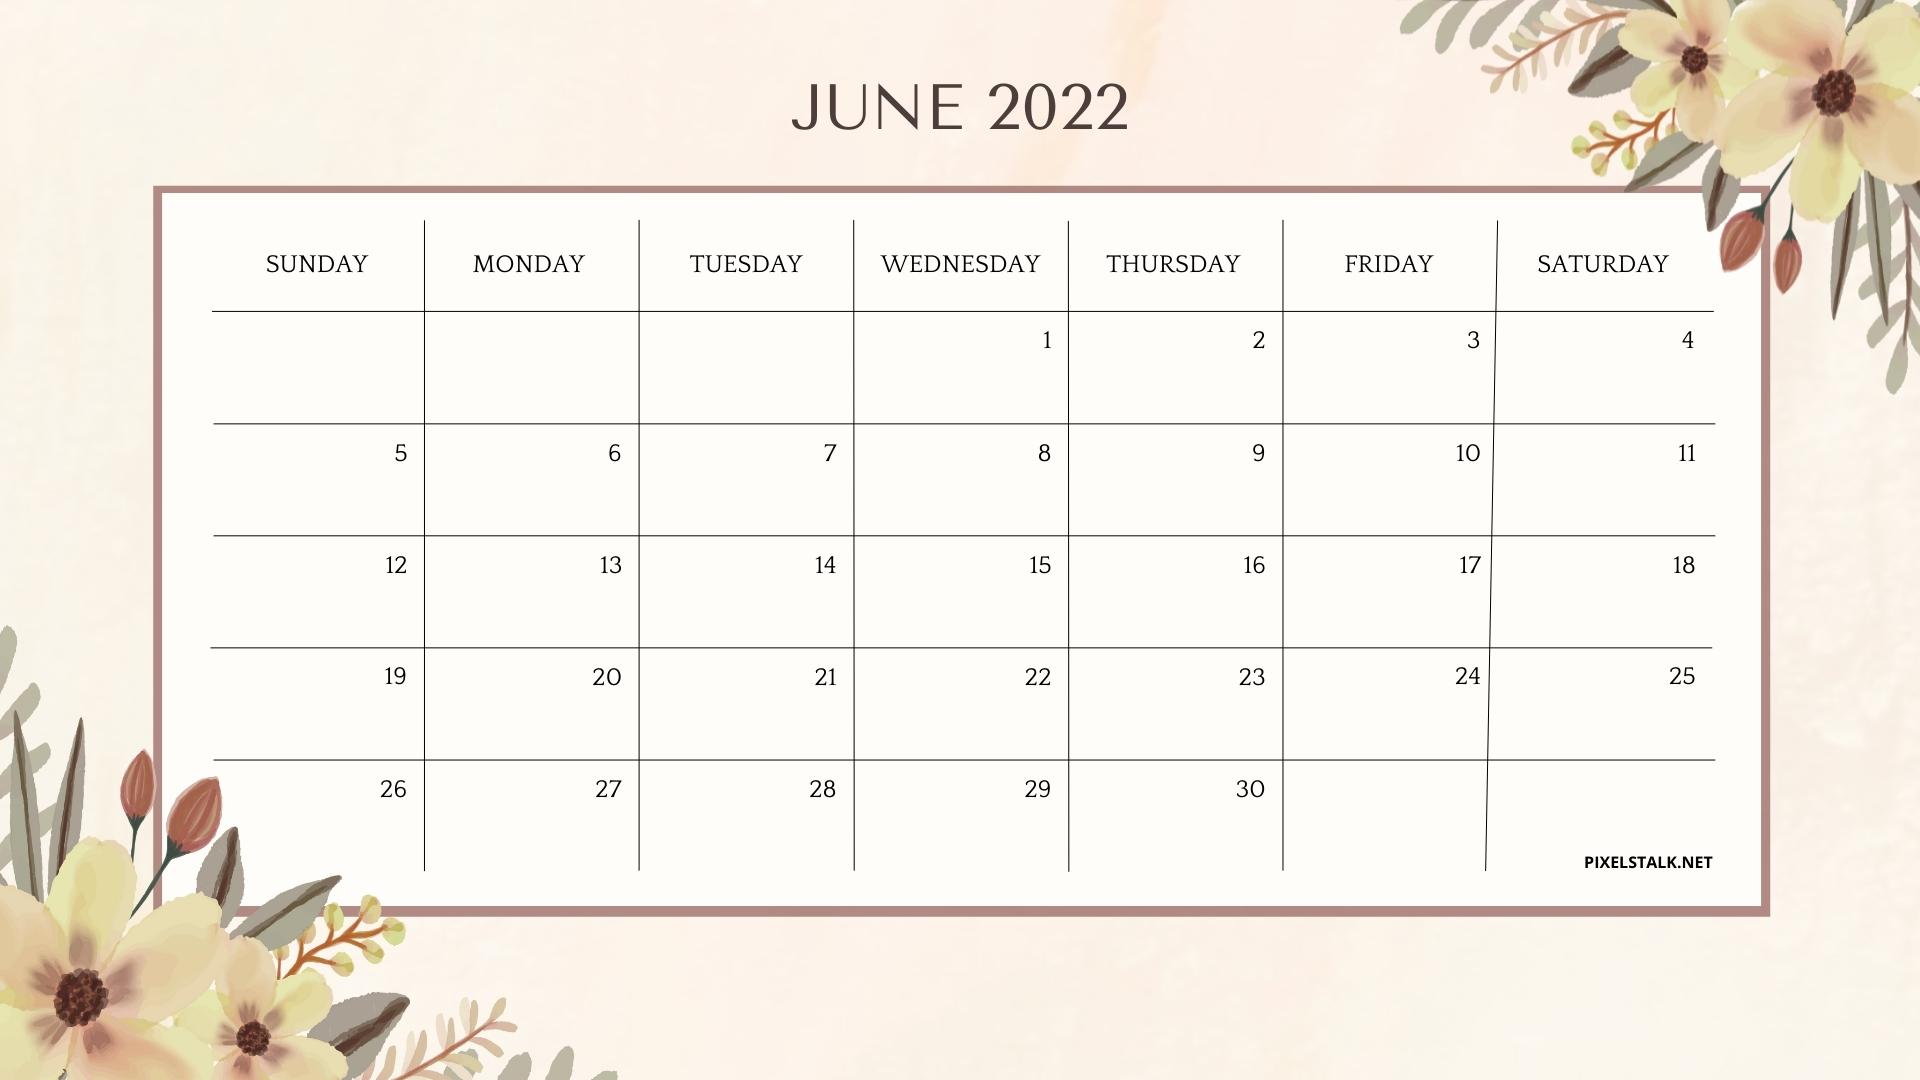 June 2022 Calendar Wallpapers HD 1920x1080